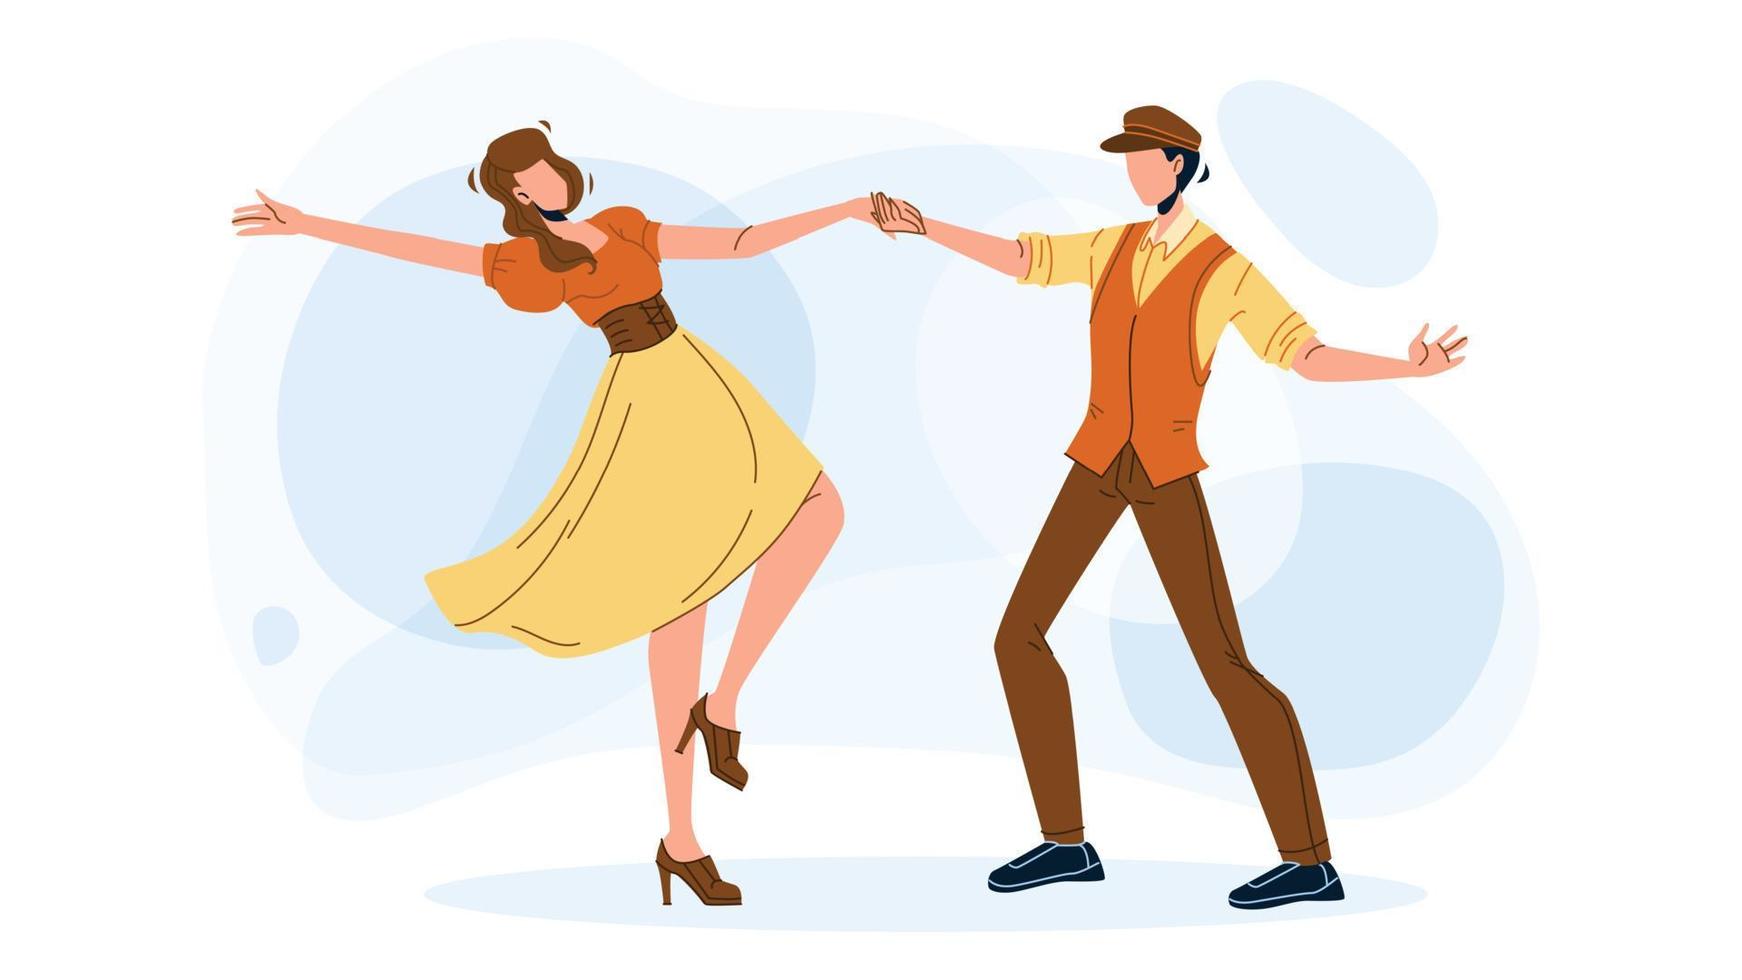 festa de dança swing dançando vetor jovem casal